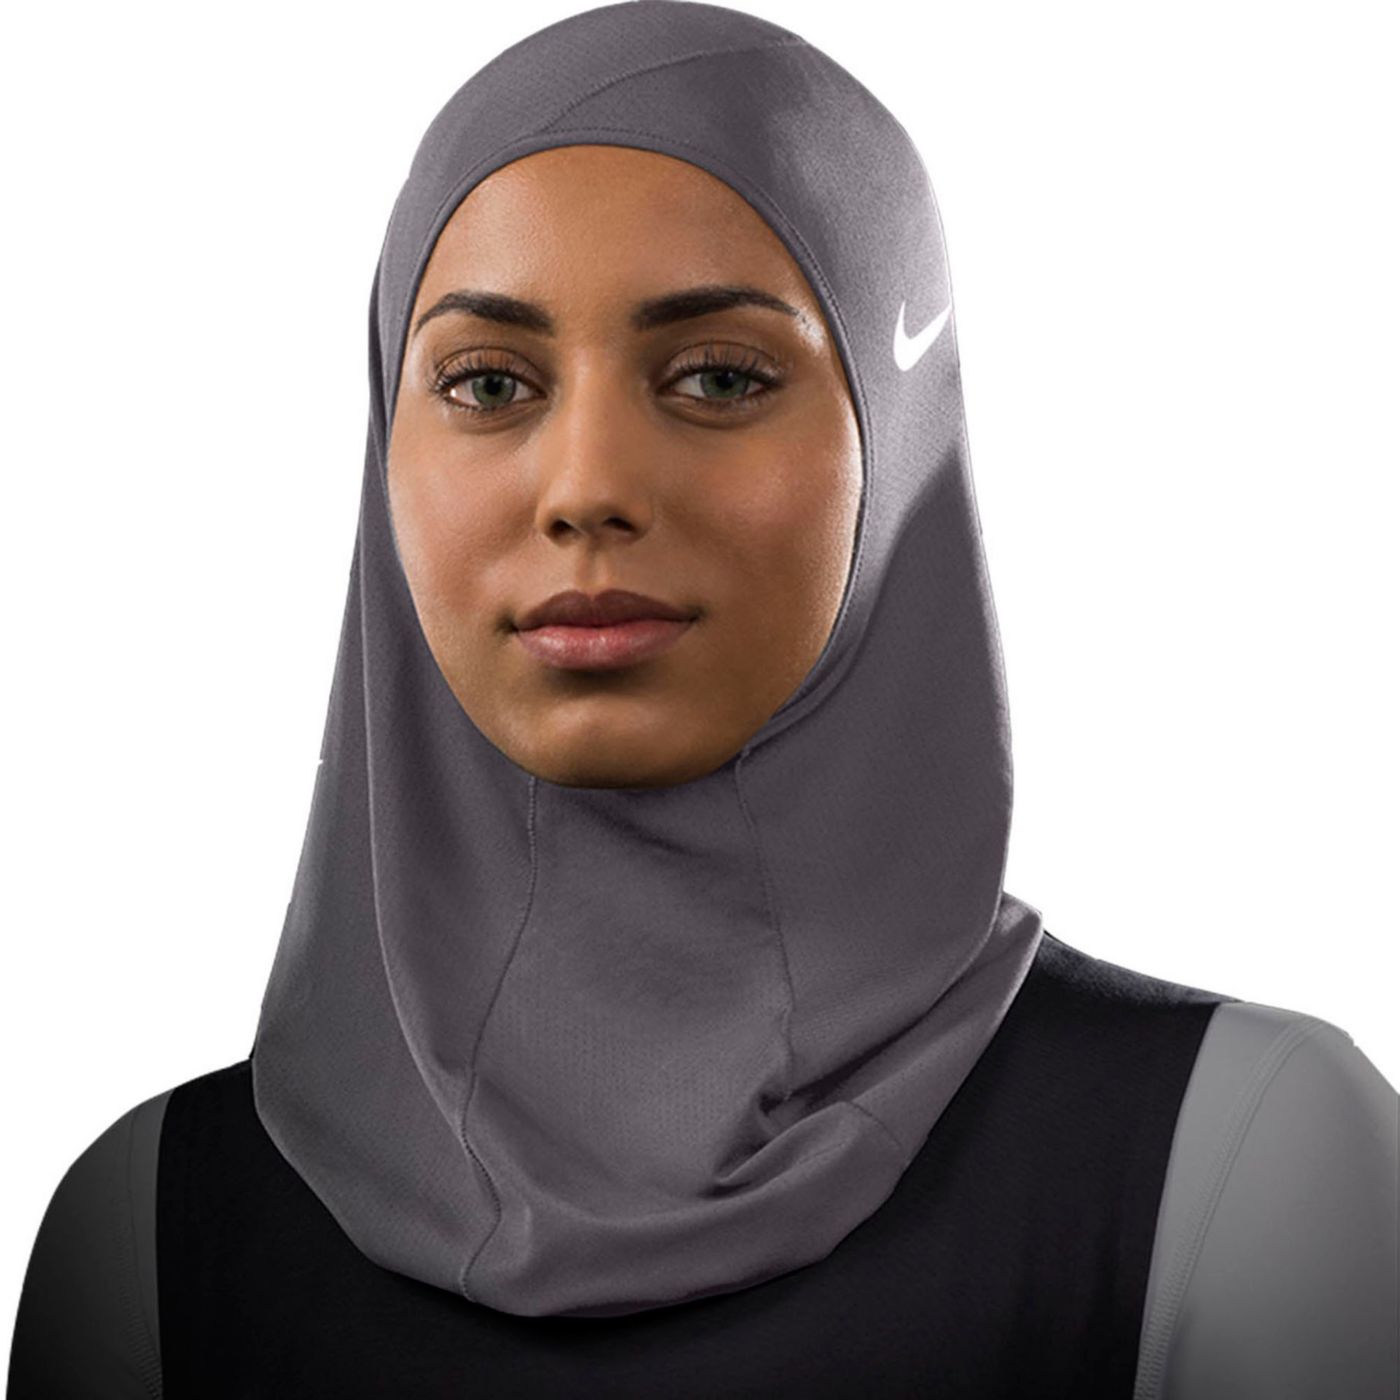  Nike  Women s Pro  Hijab  DICK S Sporting Goods